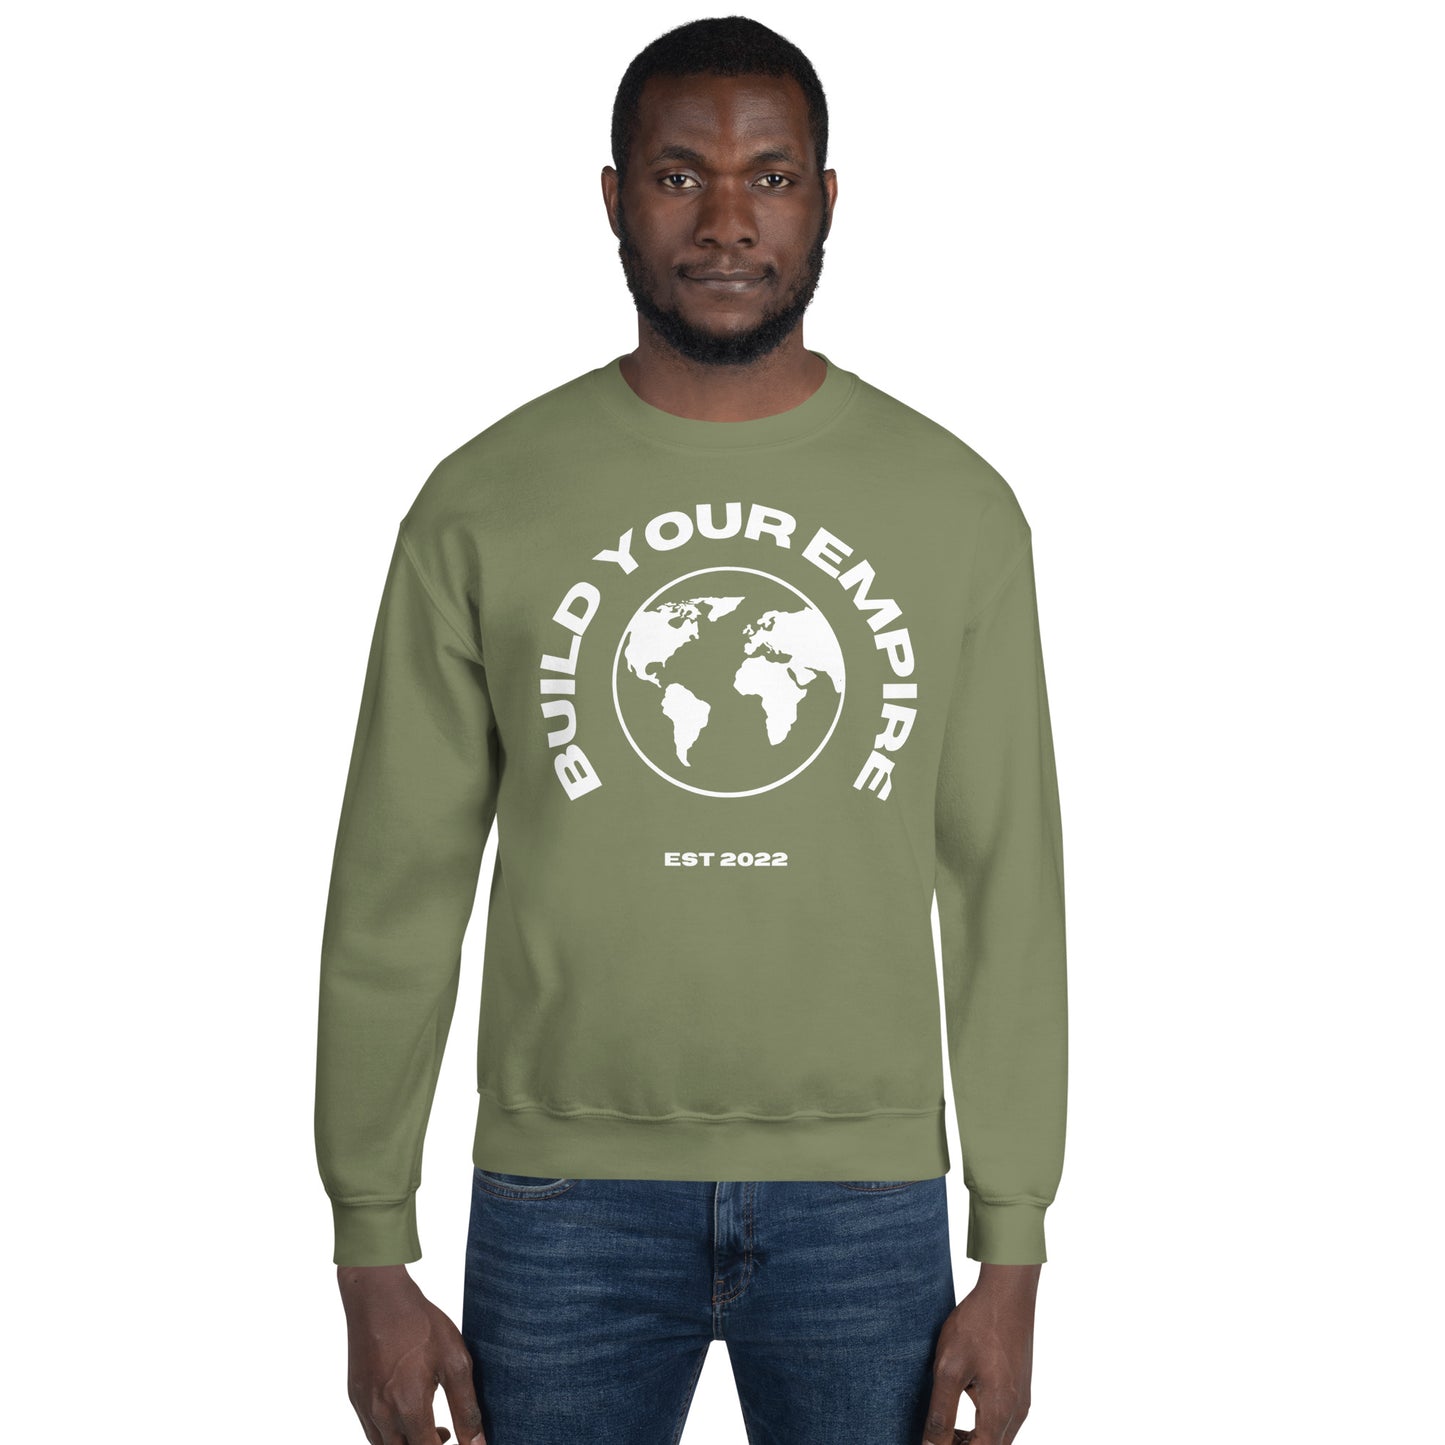 Build Your Empire Sweatshirt - Army Green